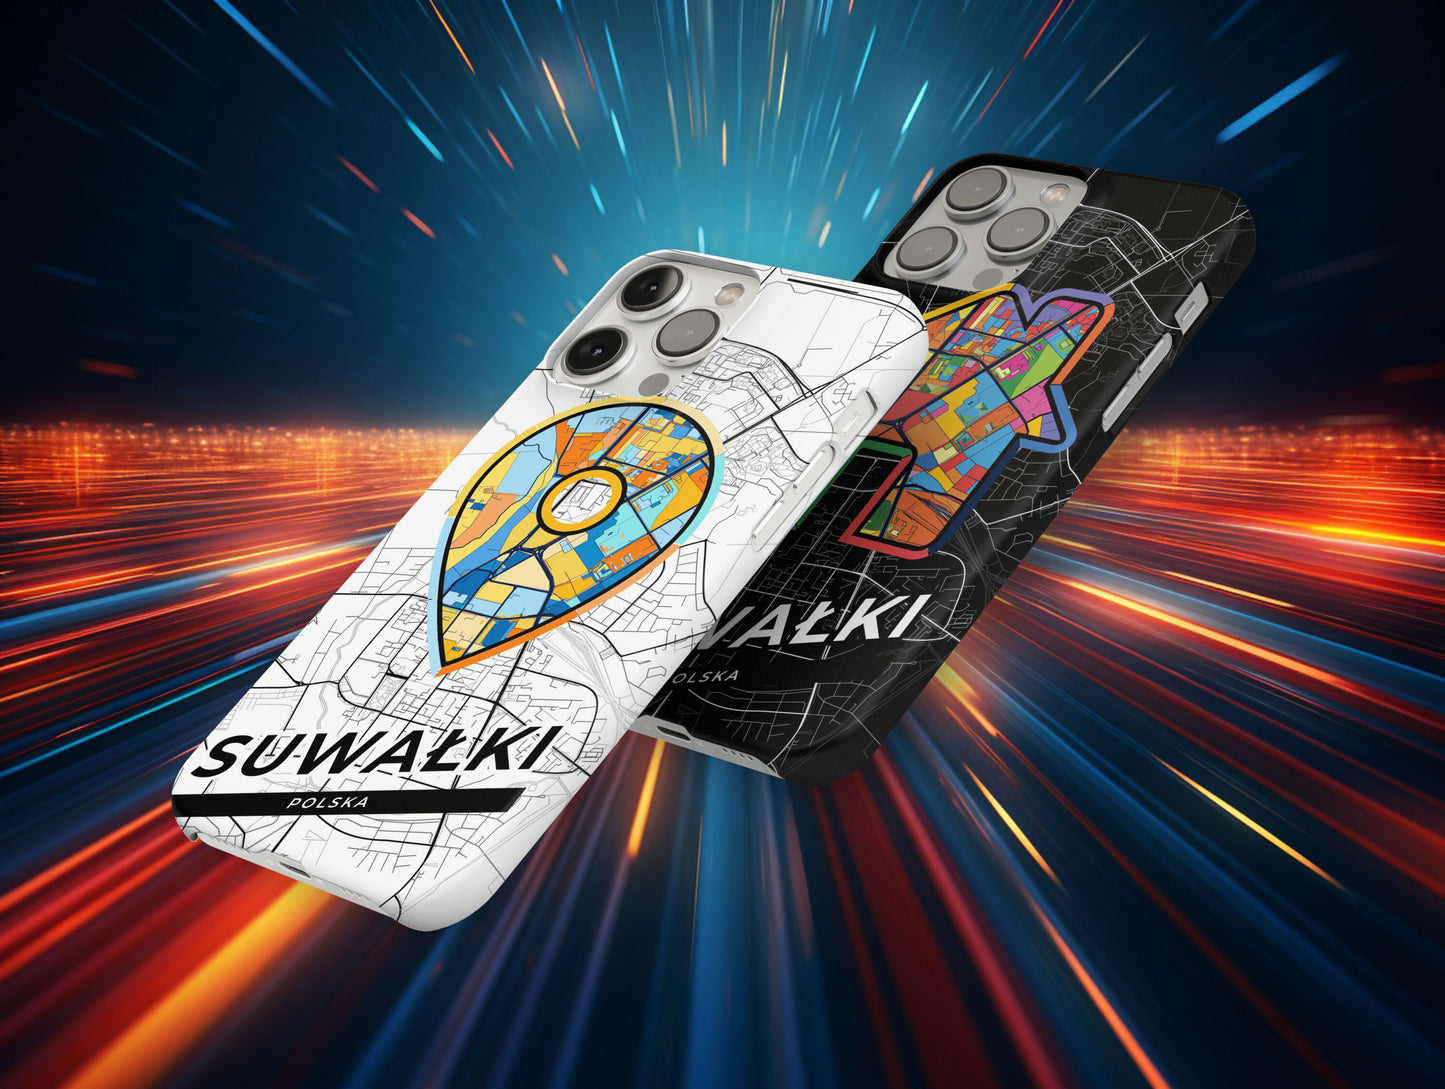 Suwałki Poland slim phone case with colorful icon